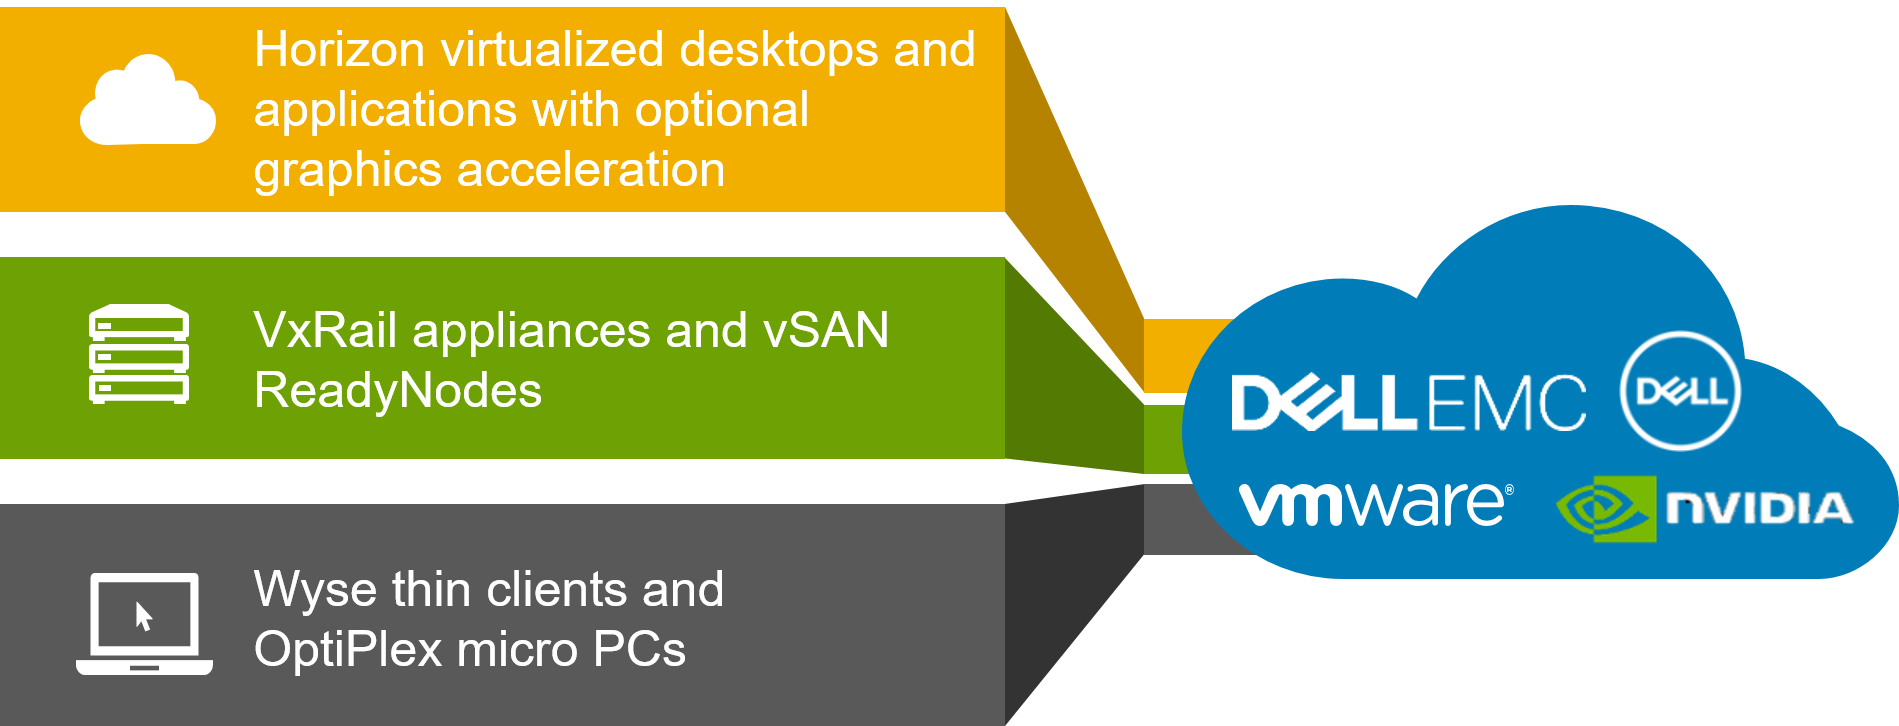 Illustration of Dell EMC VDI Complete Solutions